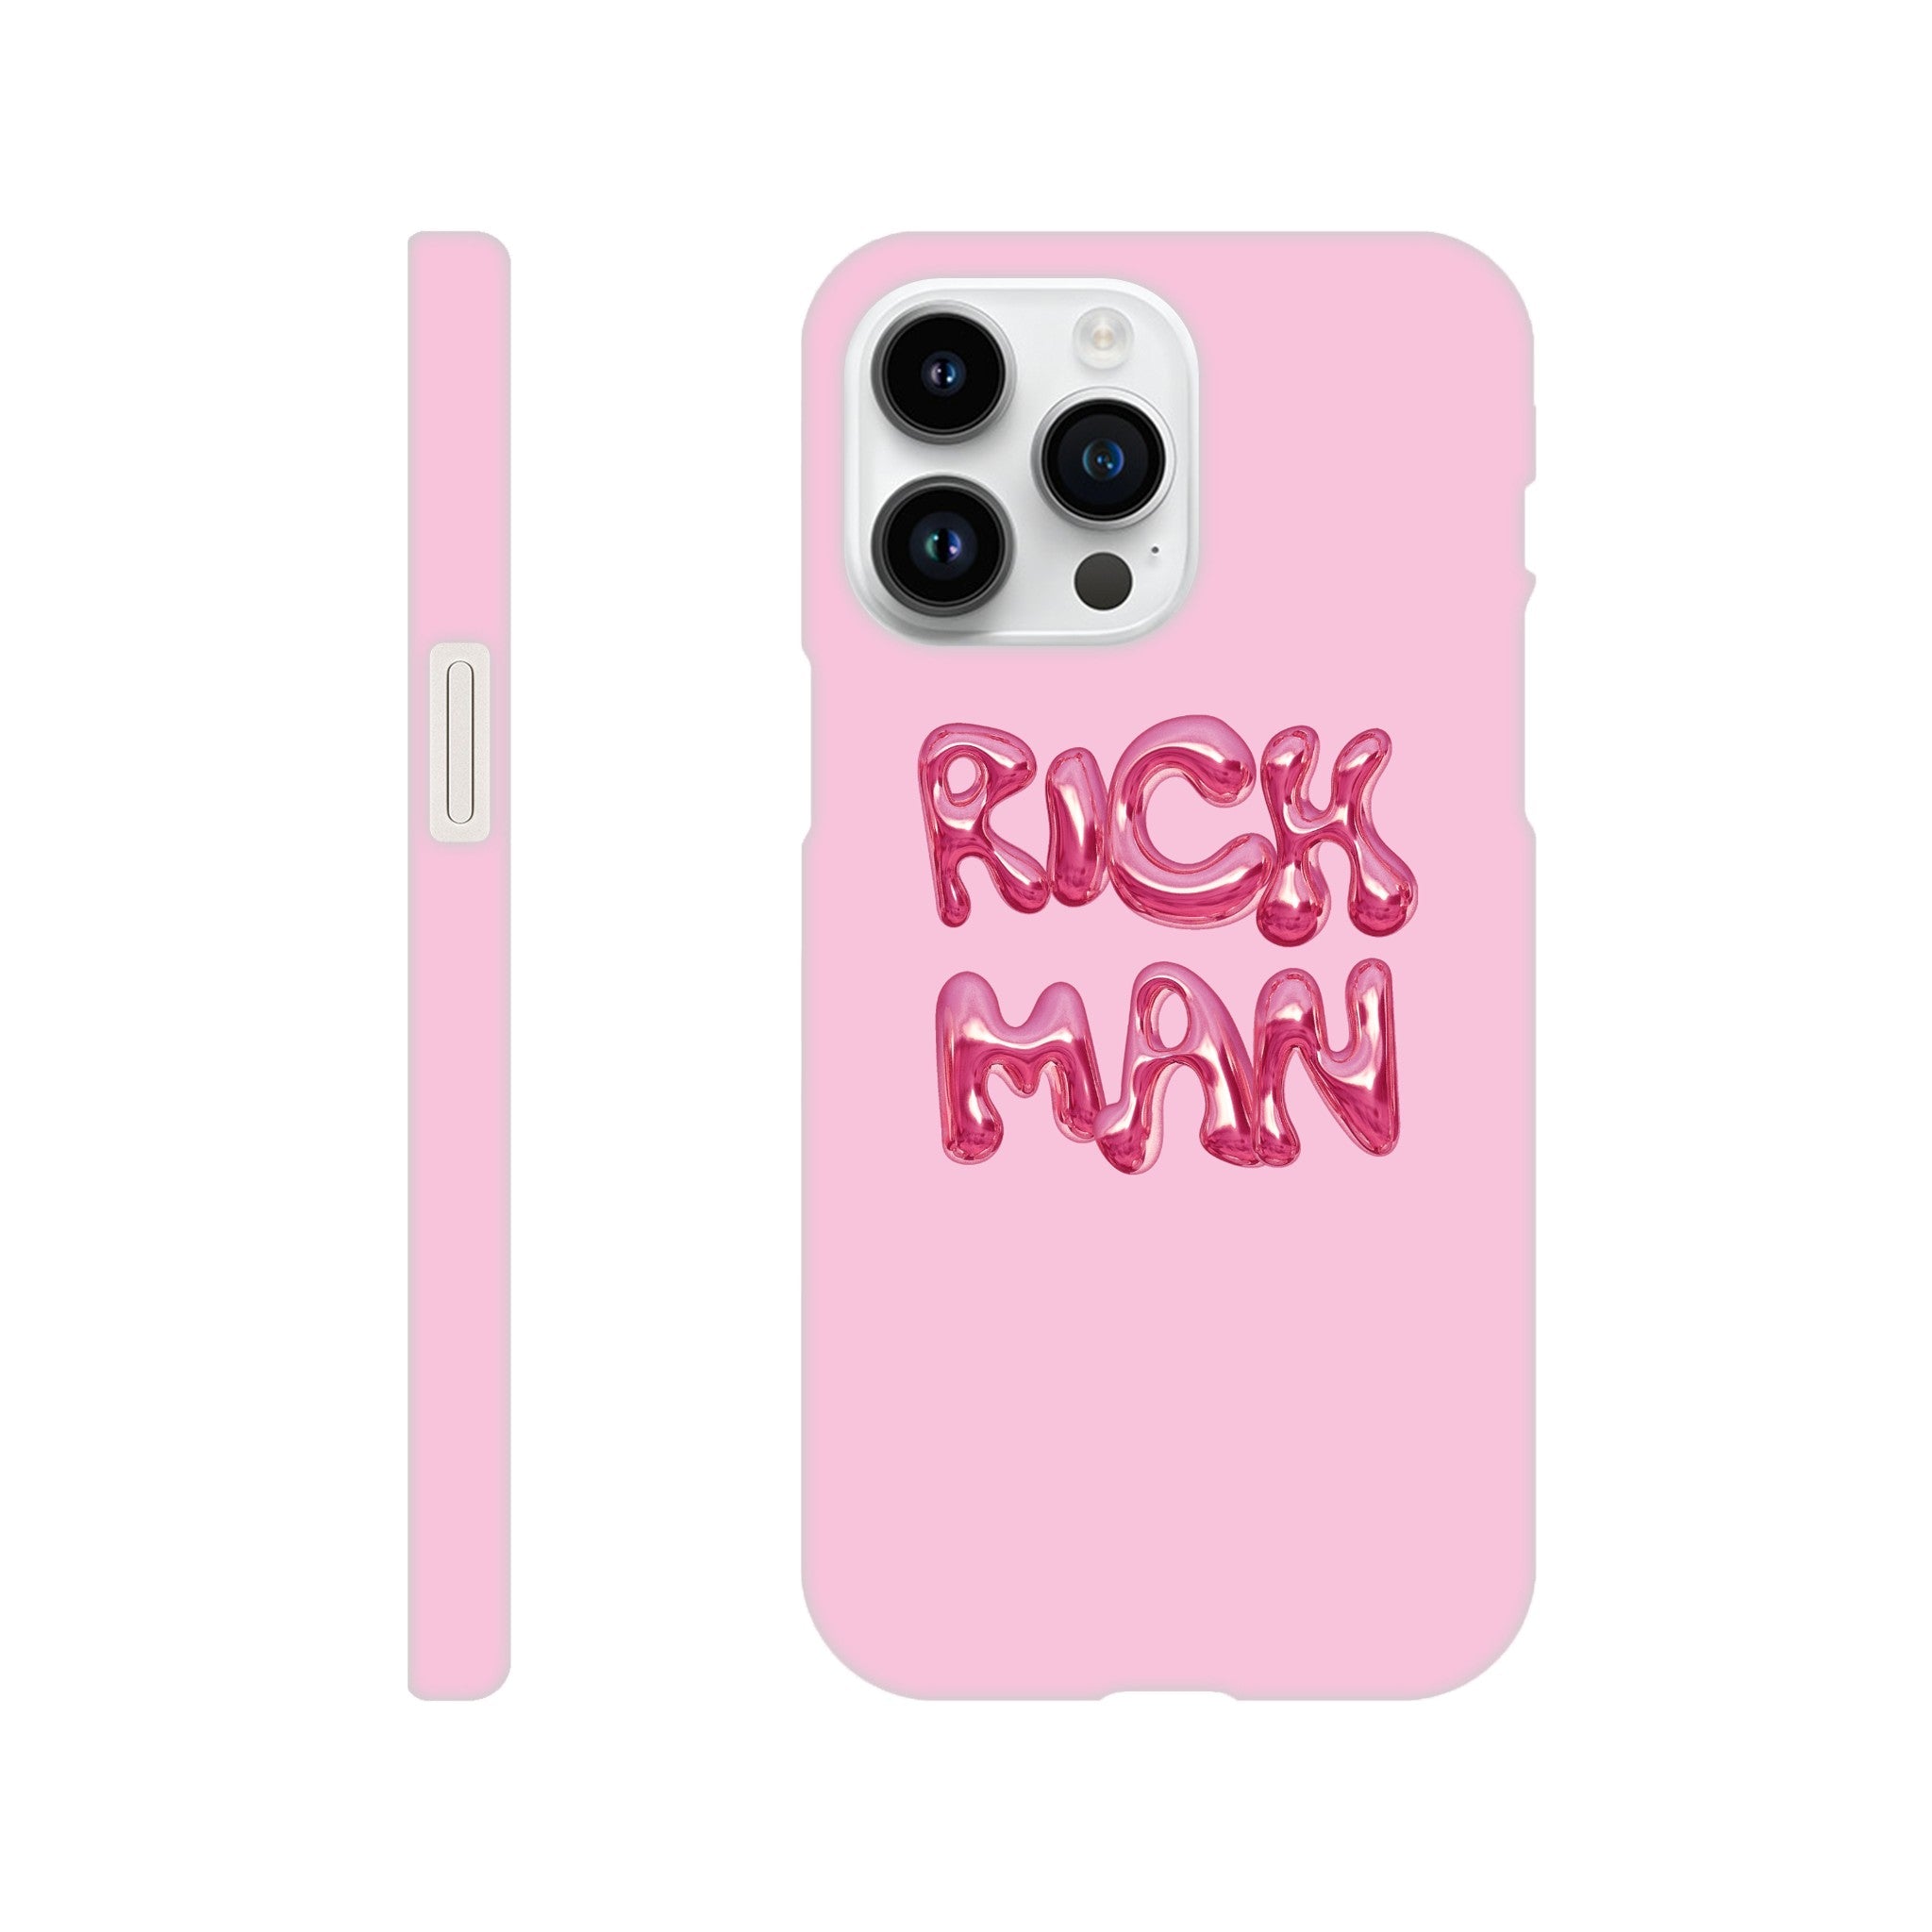 'RICH MAN' phone case